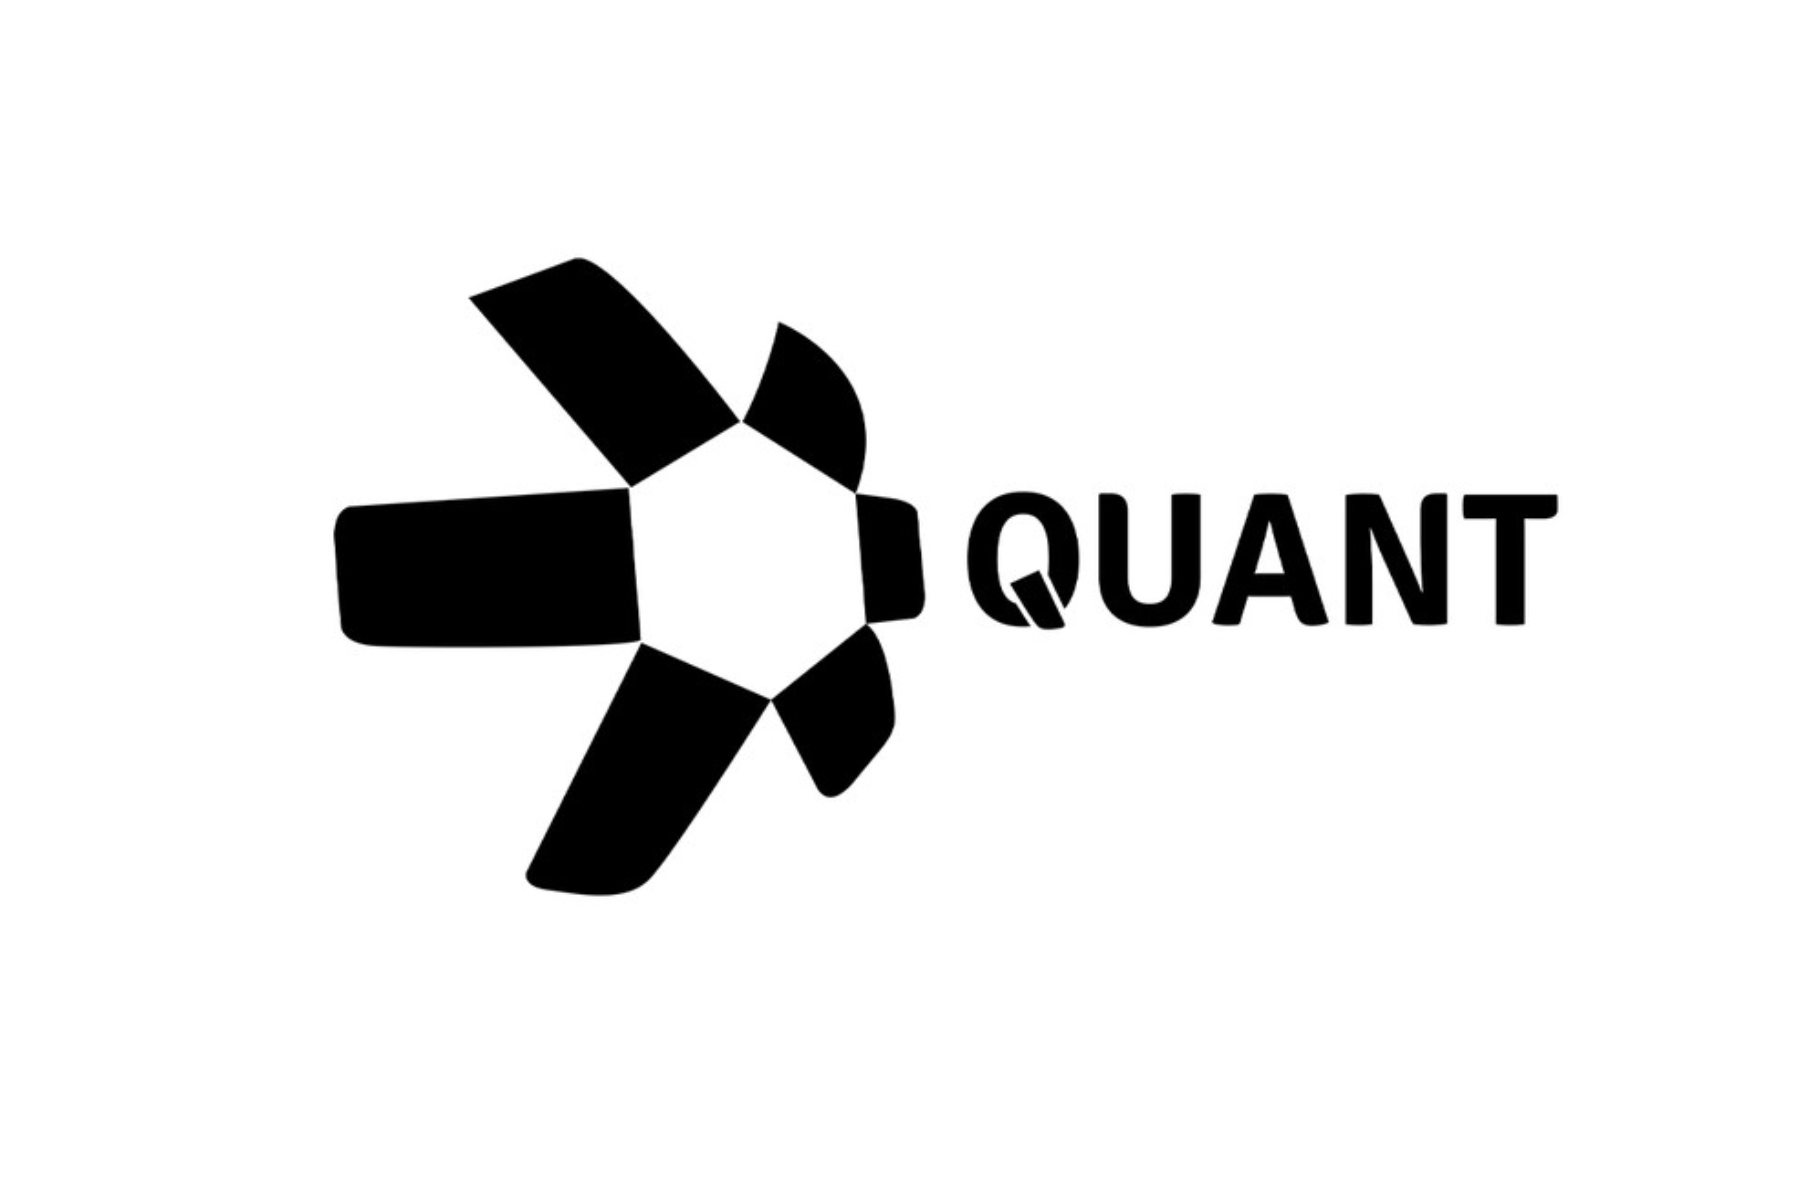 The logo of Quant (QNT)